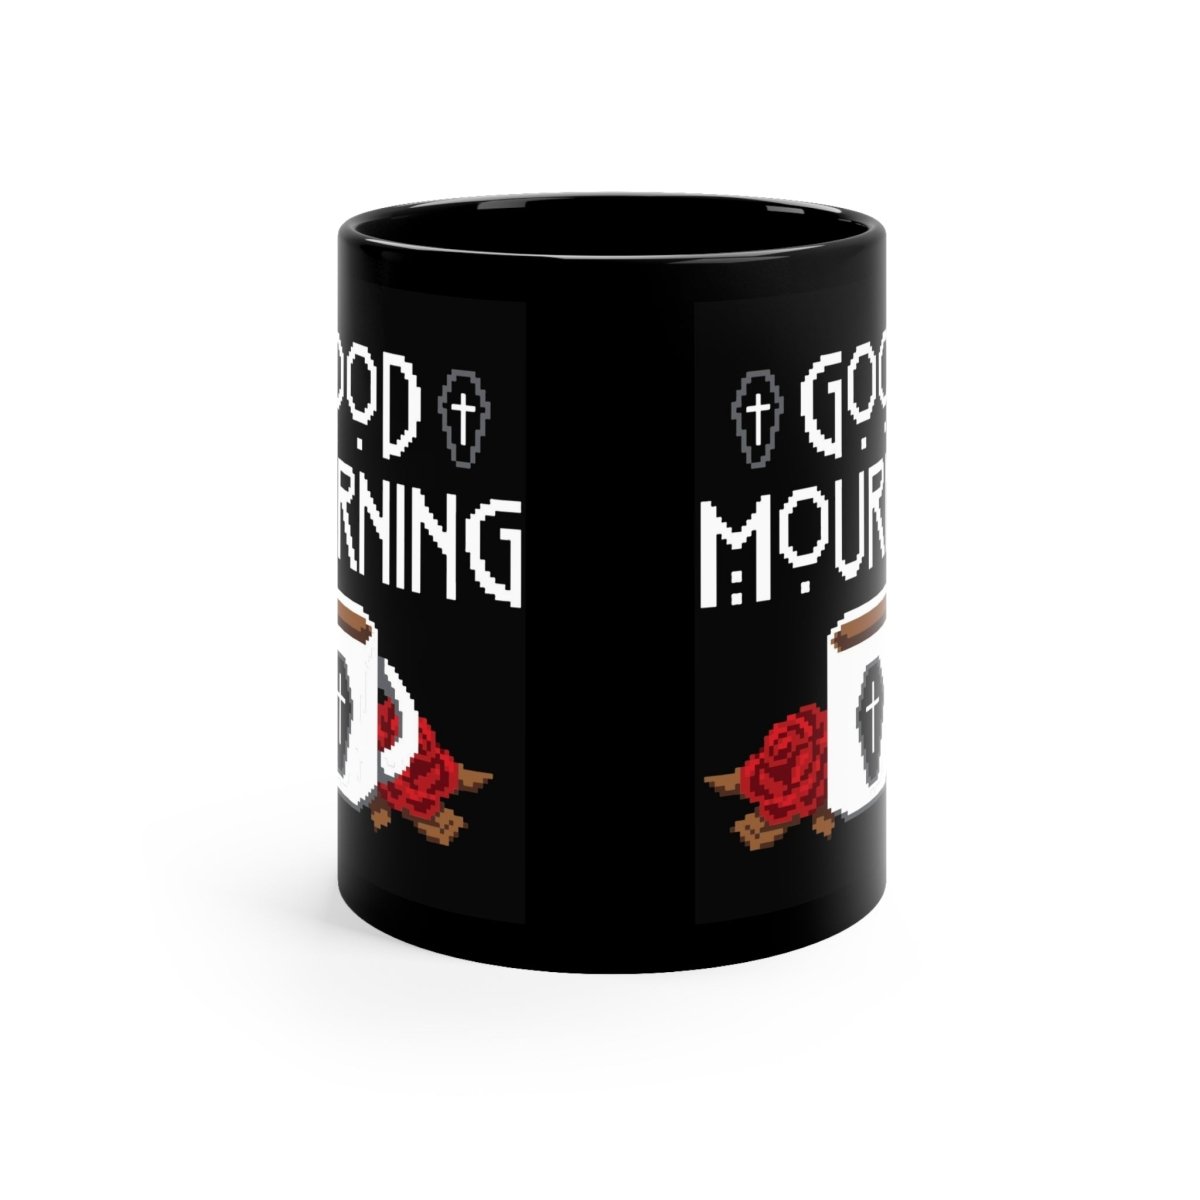 Too Fast | Good Mourning Coffee Mug